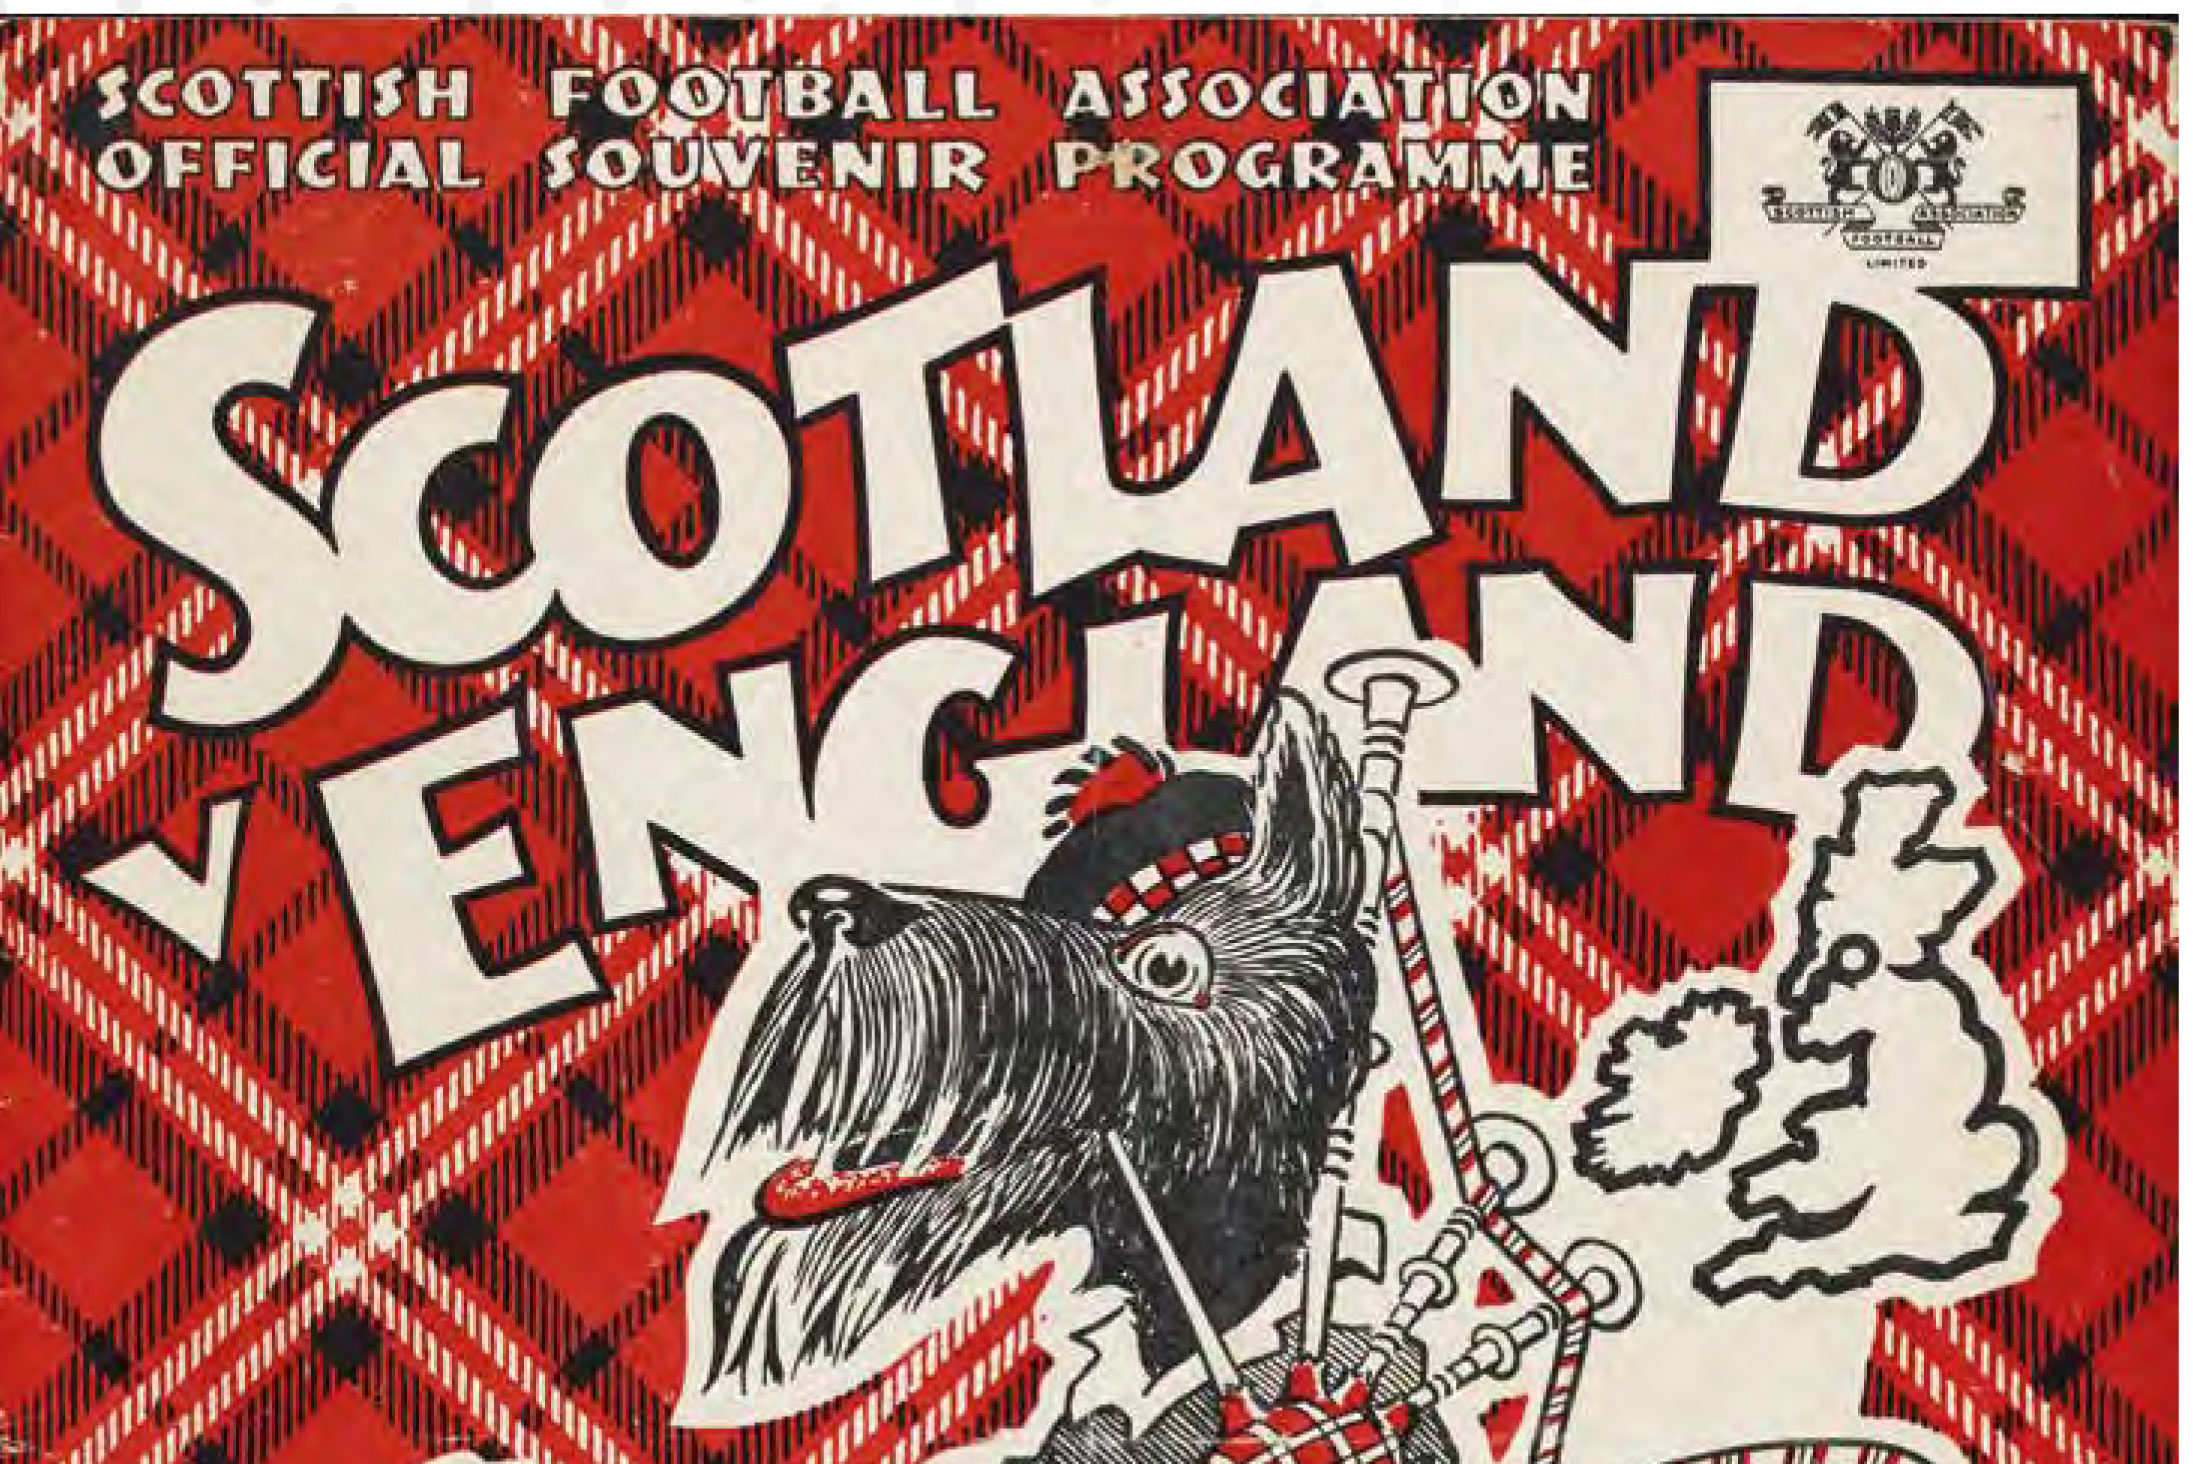 Programme for April 1950 international when England beat Scotland 1-0